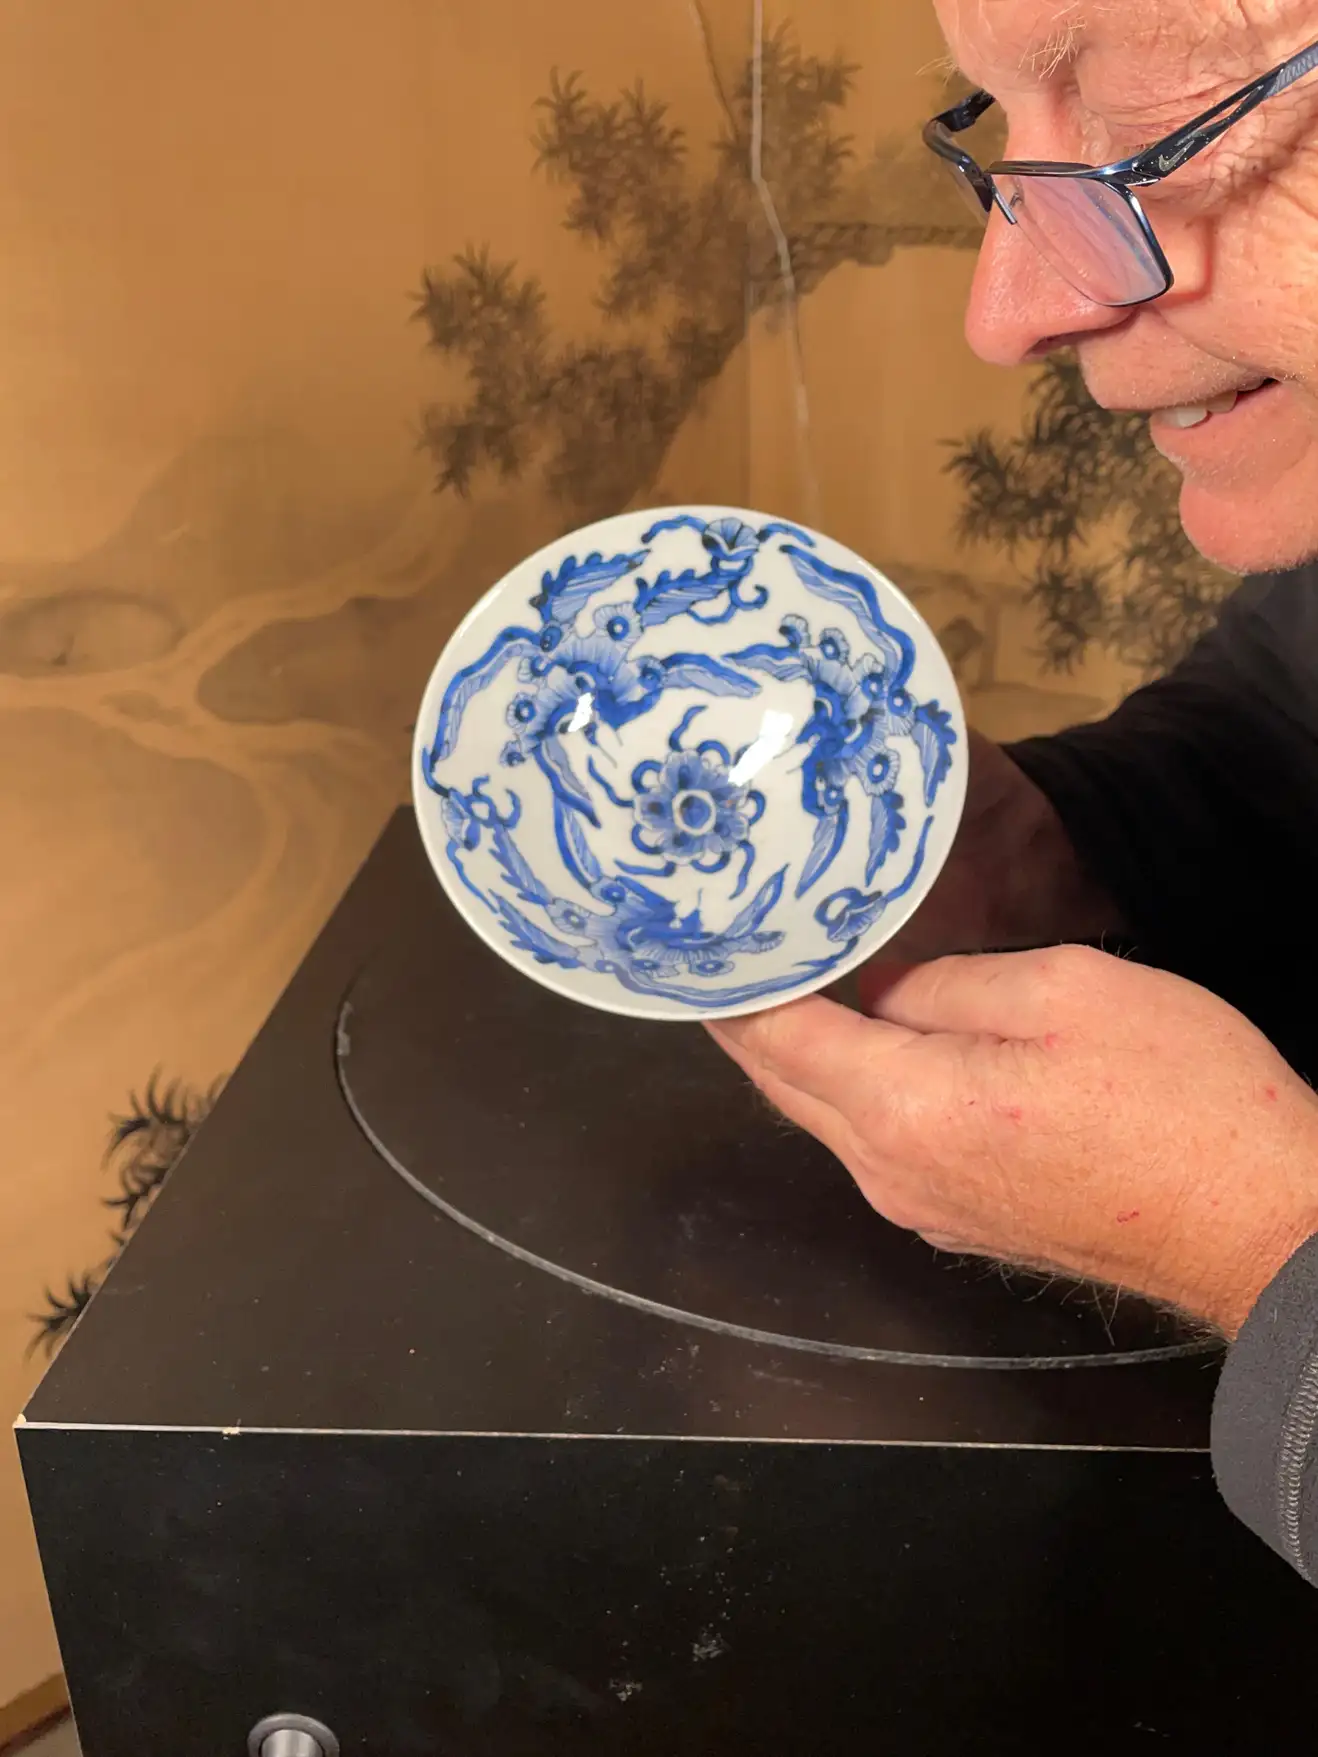 Japanese Fine Antique Blue and White Floral Tea Bowl, 19th Century